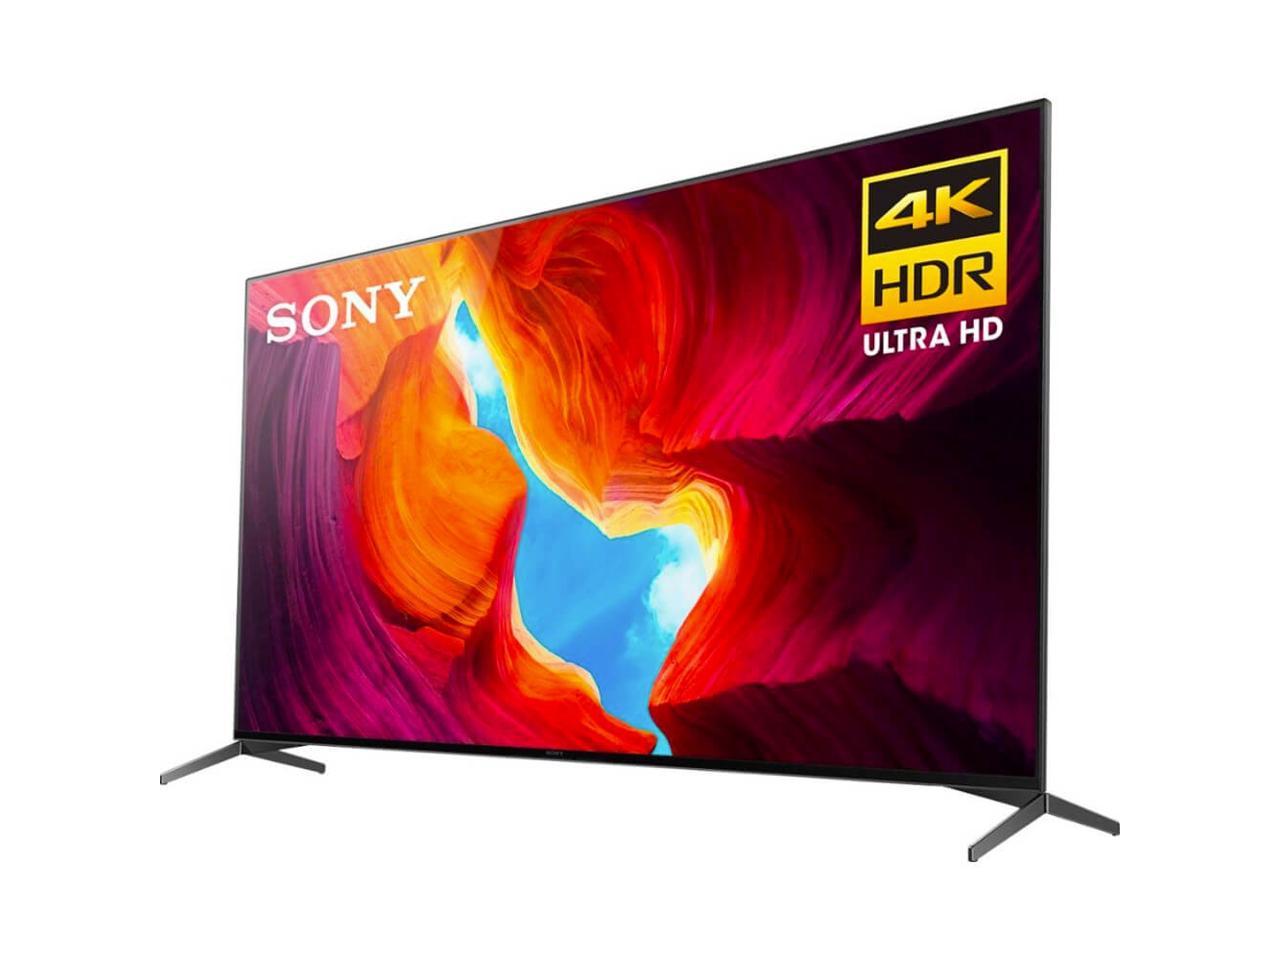 Sony XBR75X950H 75 inch 4K UHD HDR Smart LED TV: $1798